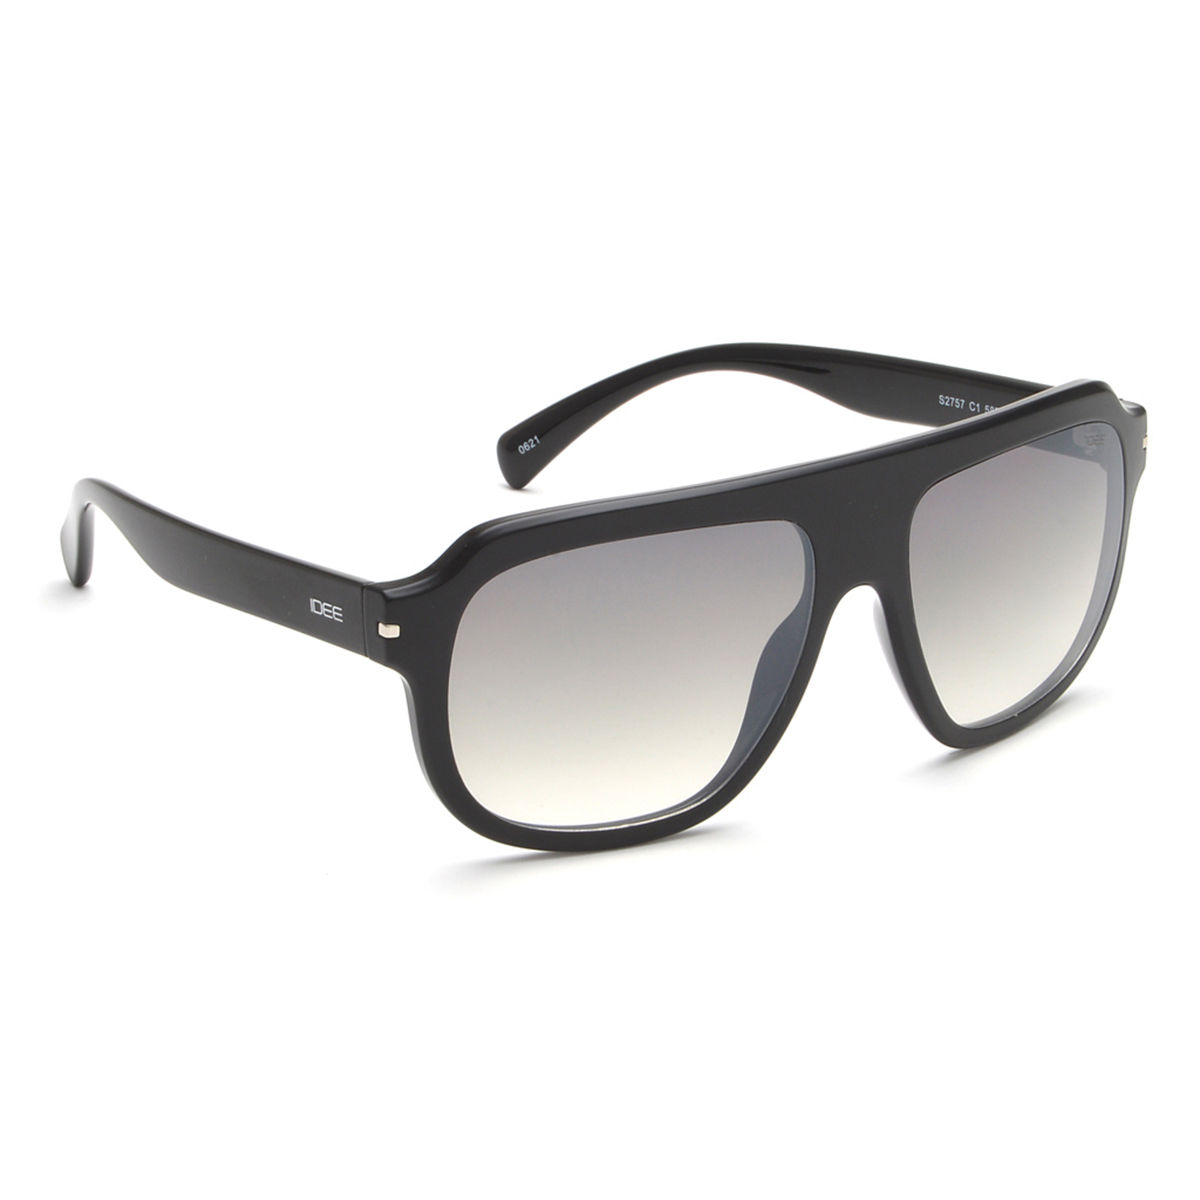 IDEE S2757 C1 58 Sunglasses IDS2757C1SG: Buy IDEE S2757 C1 58 ...